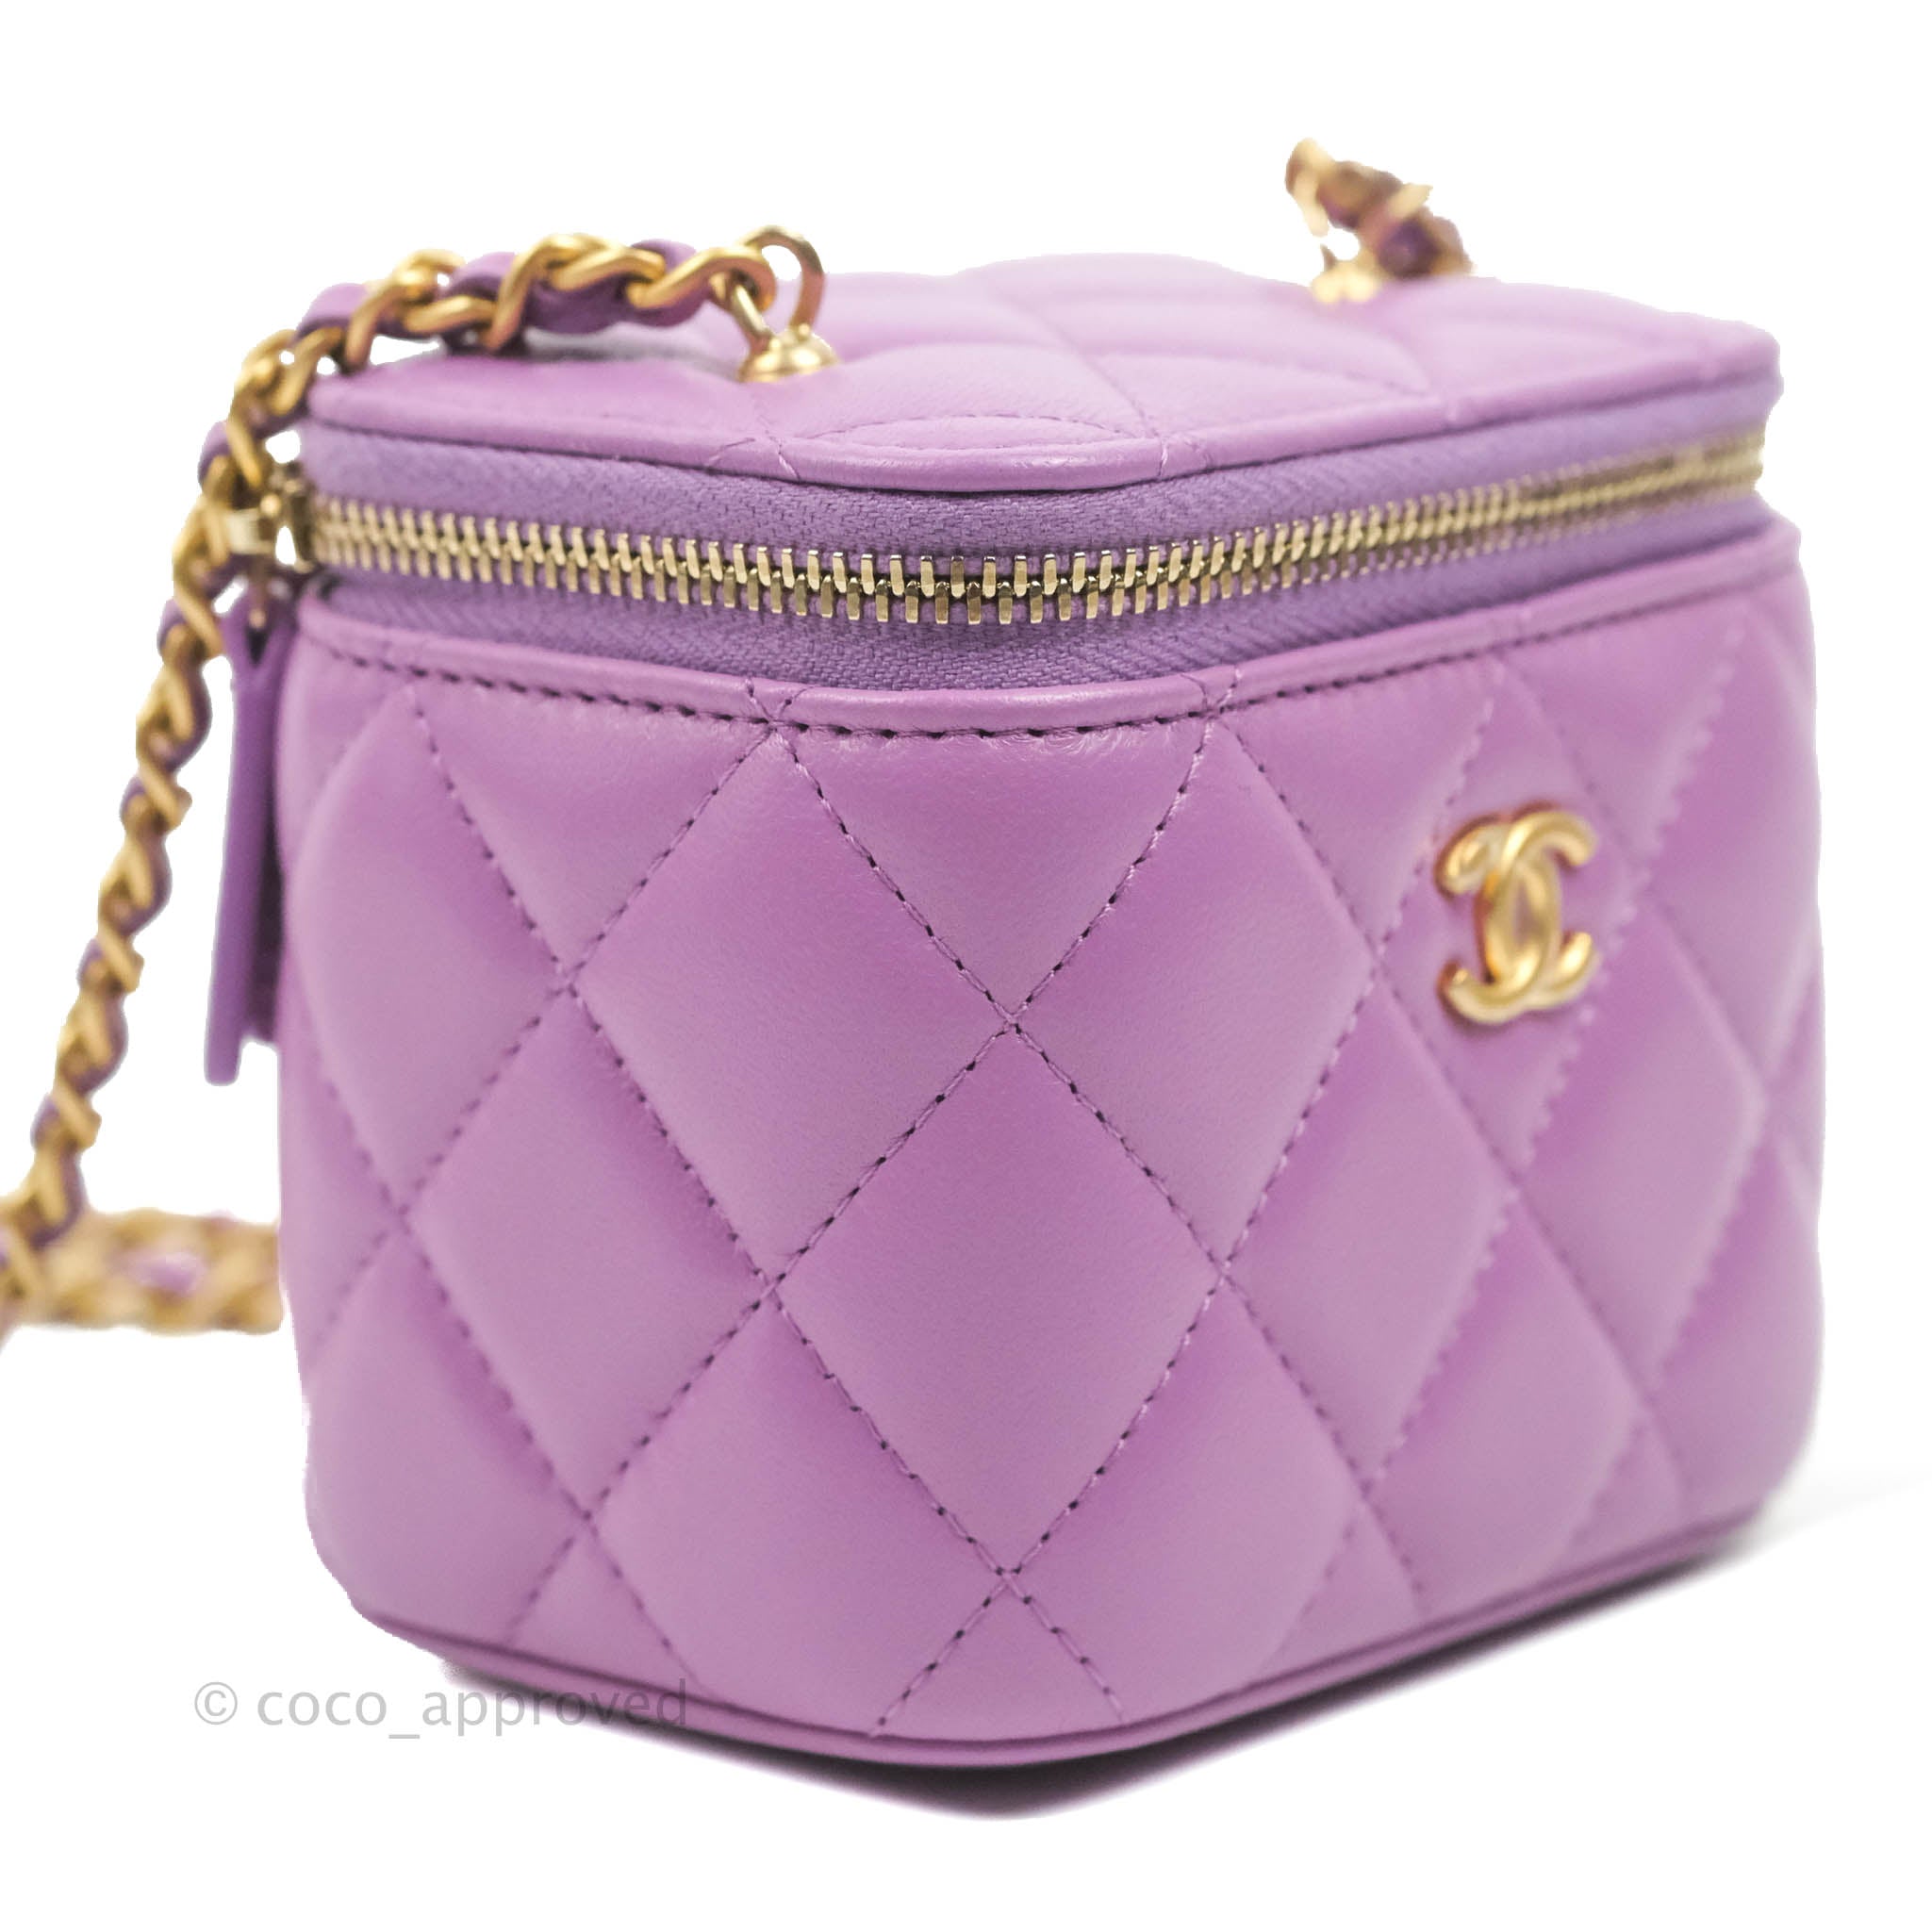 chanel purple vanity case bag